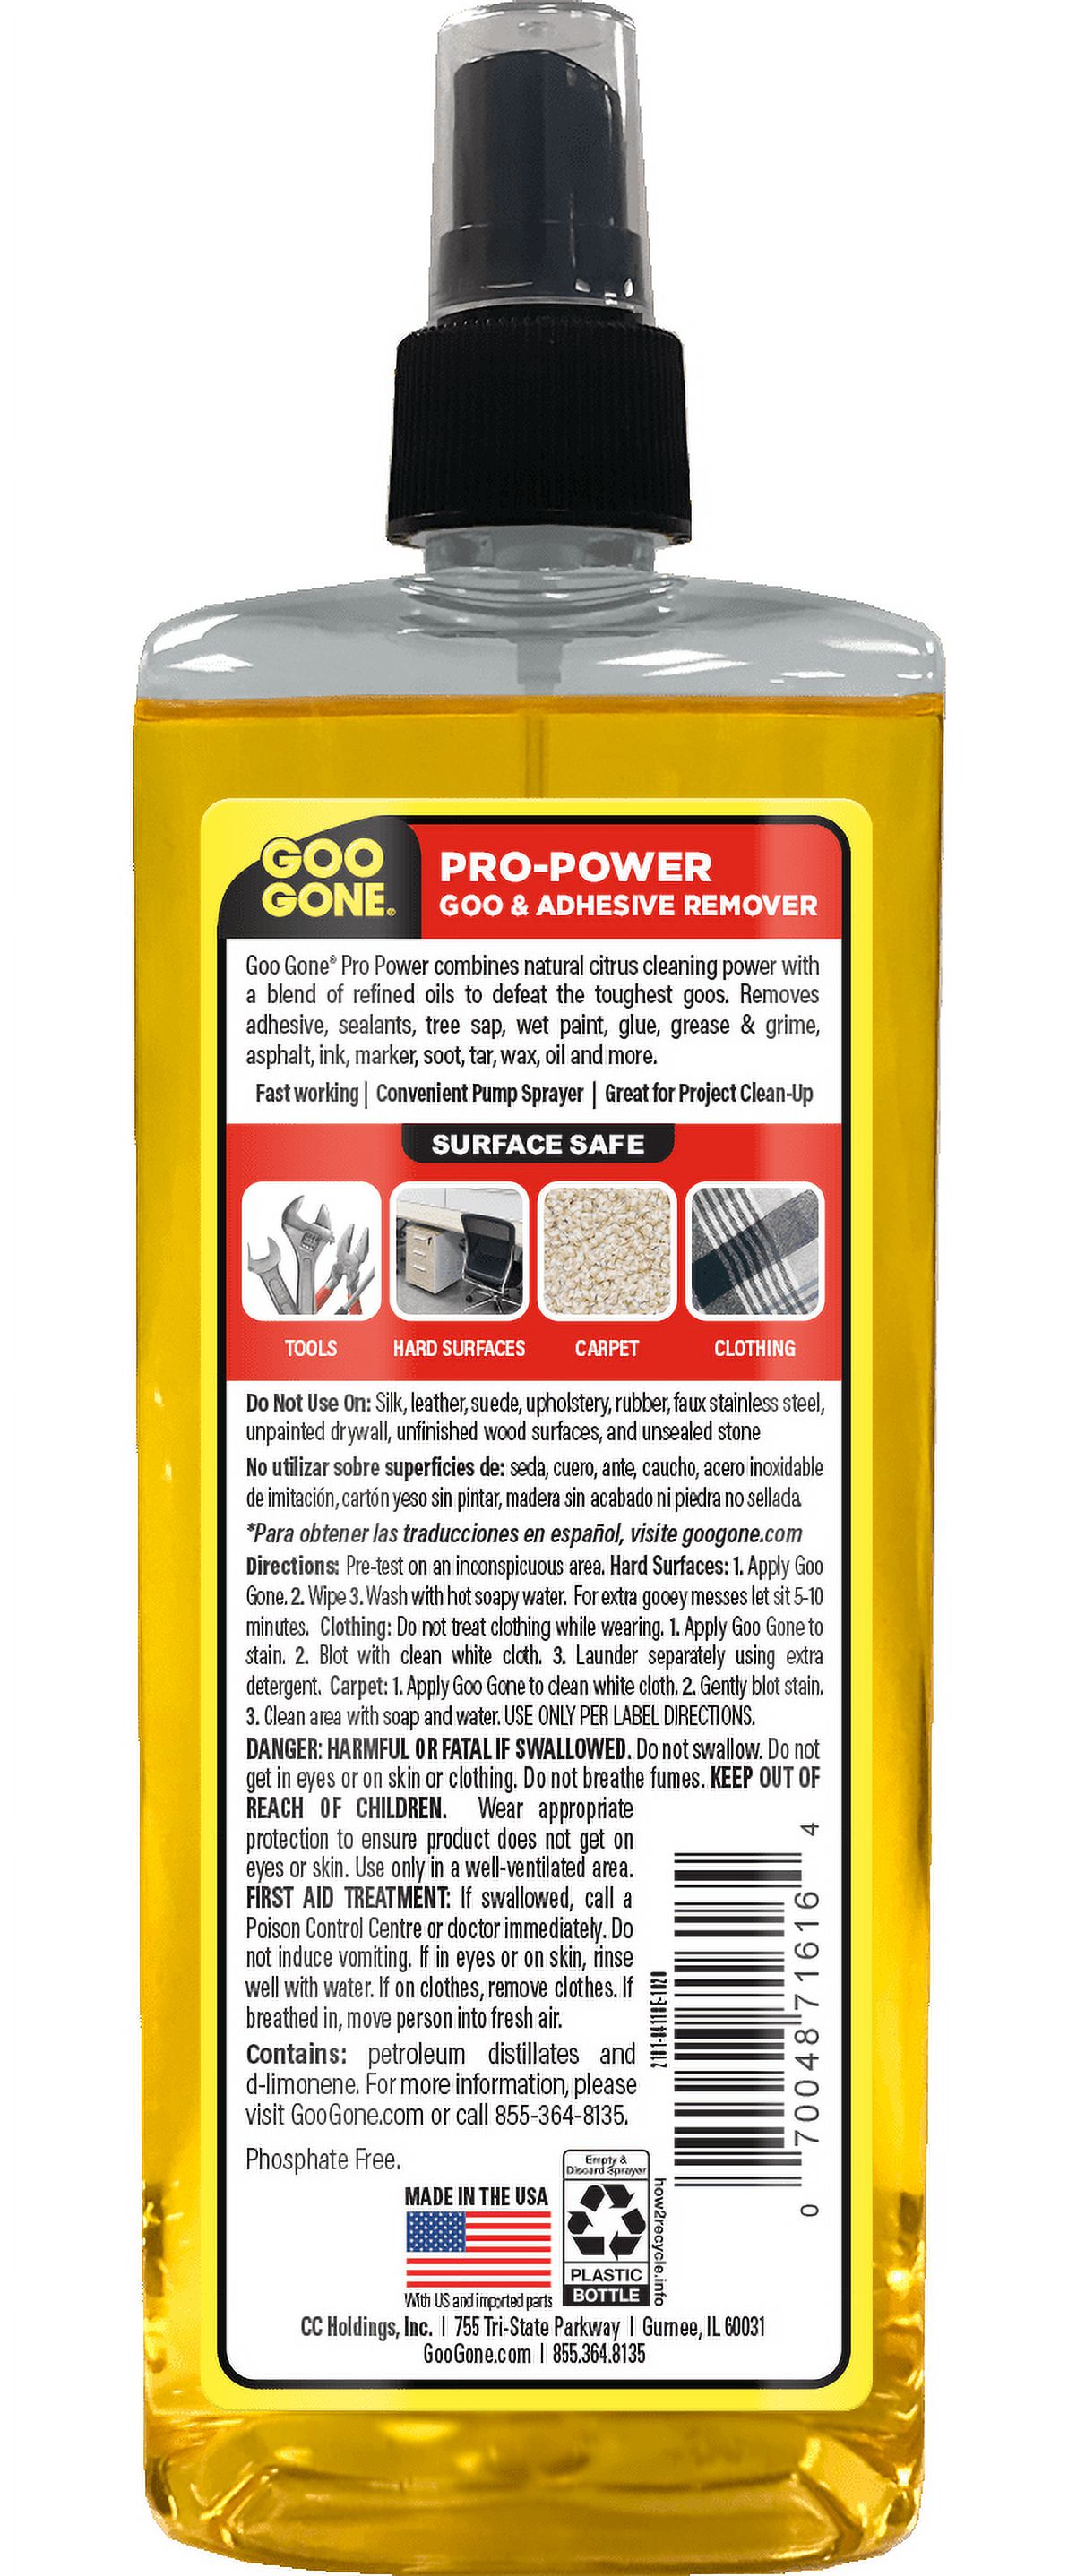 Goo Gone Pro-Power Adhesive, Grease & Tar Remover Spray, Orange Citrus Scent, 16 oz - image 2 of 7